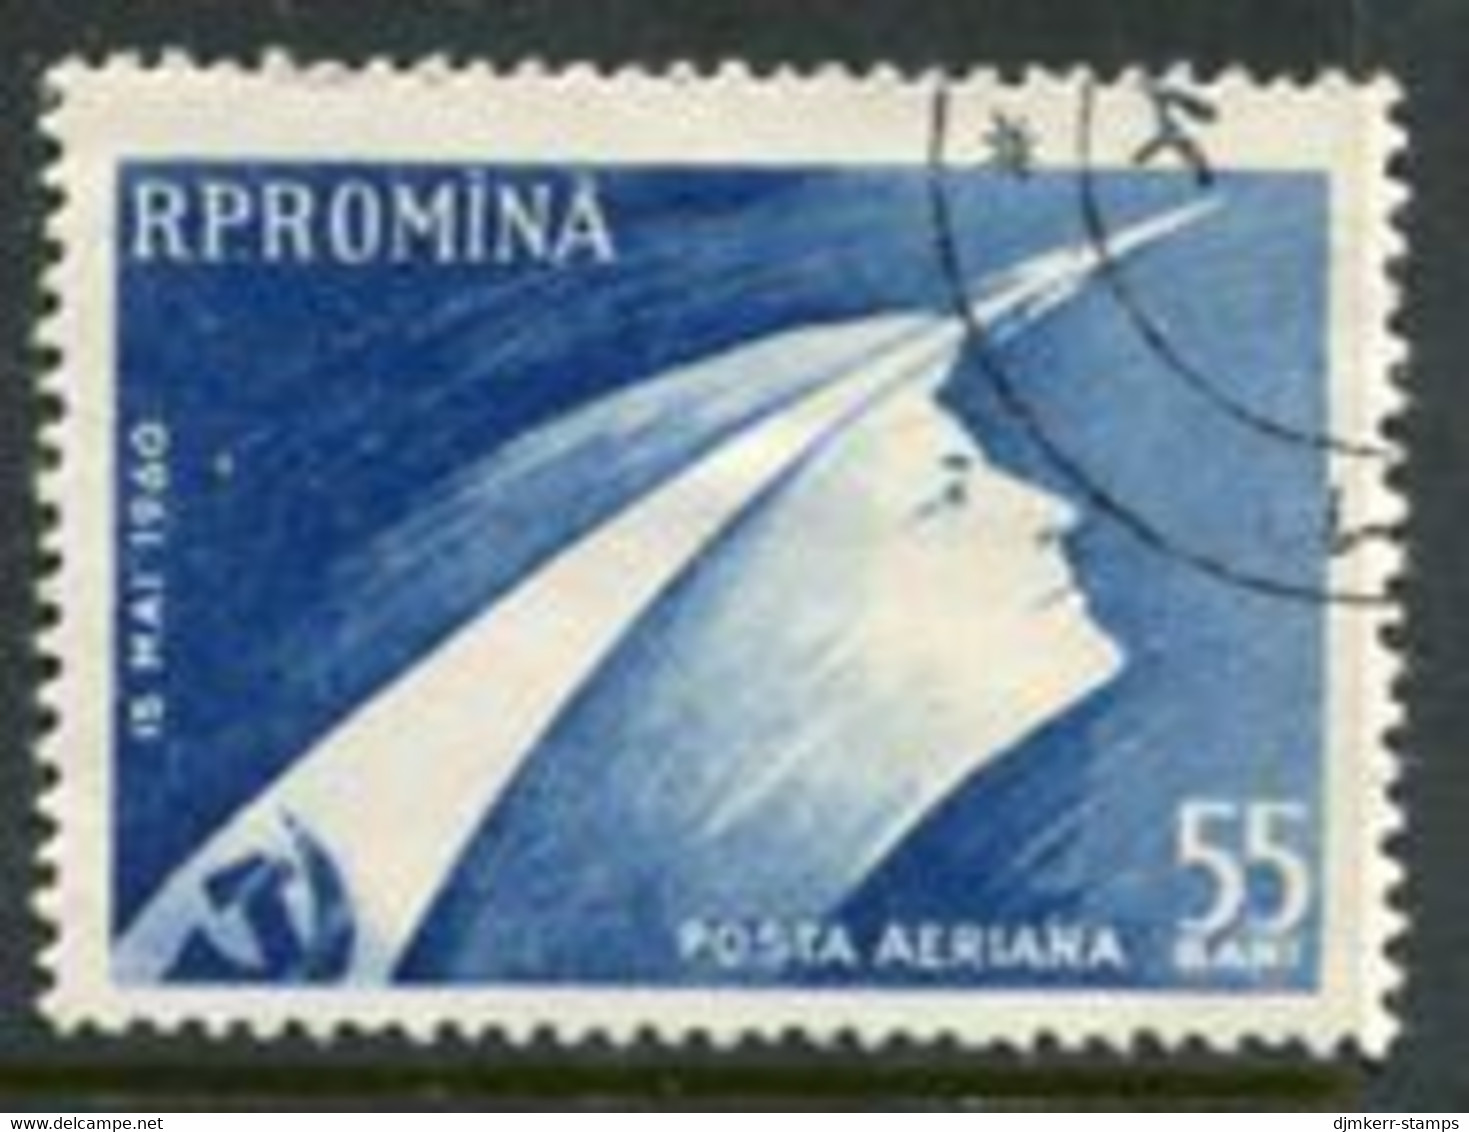 ROMANIA 1960 Launch Of Vostok Spacecraft Used.  Michel 1899 - Oblitérés